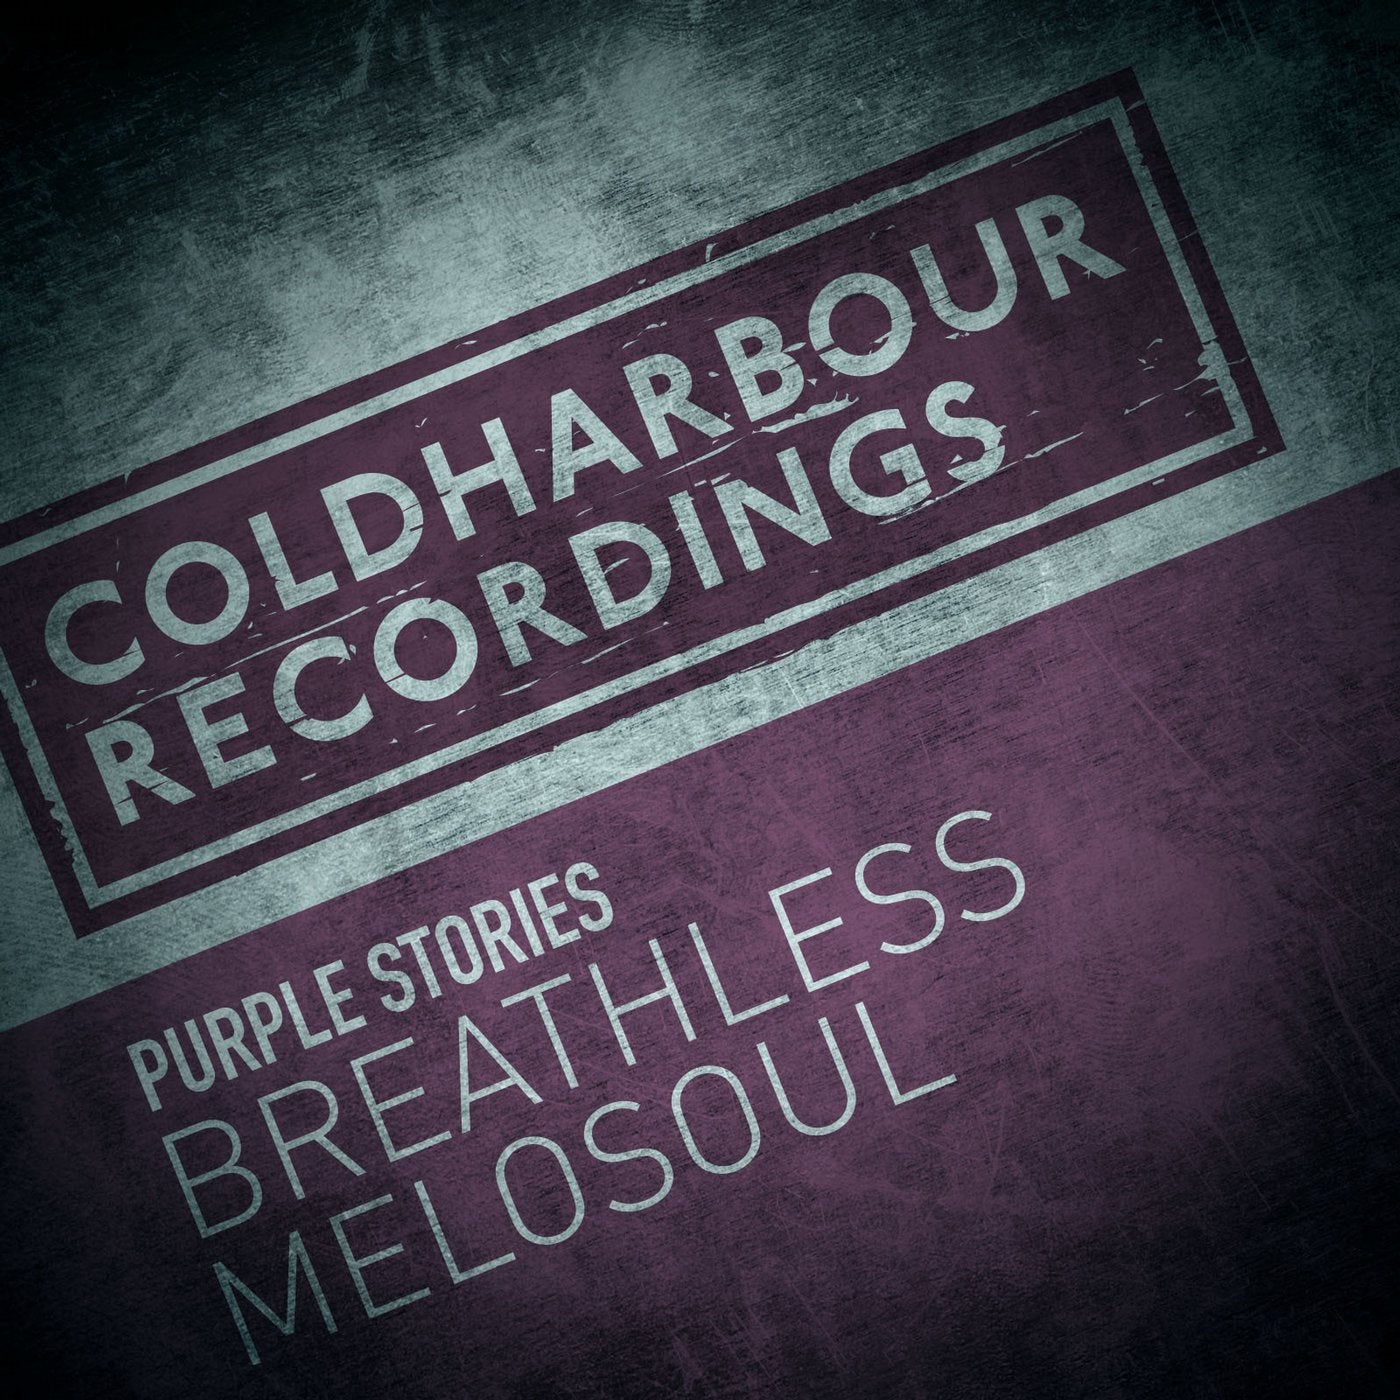 Breathless / Melosoul